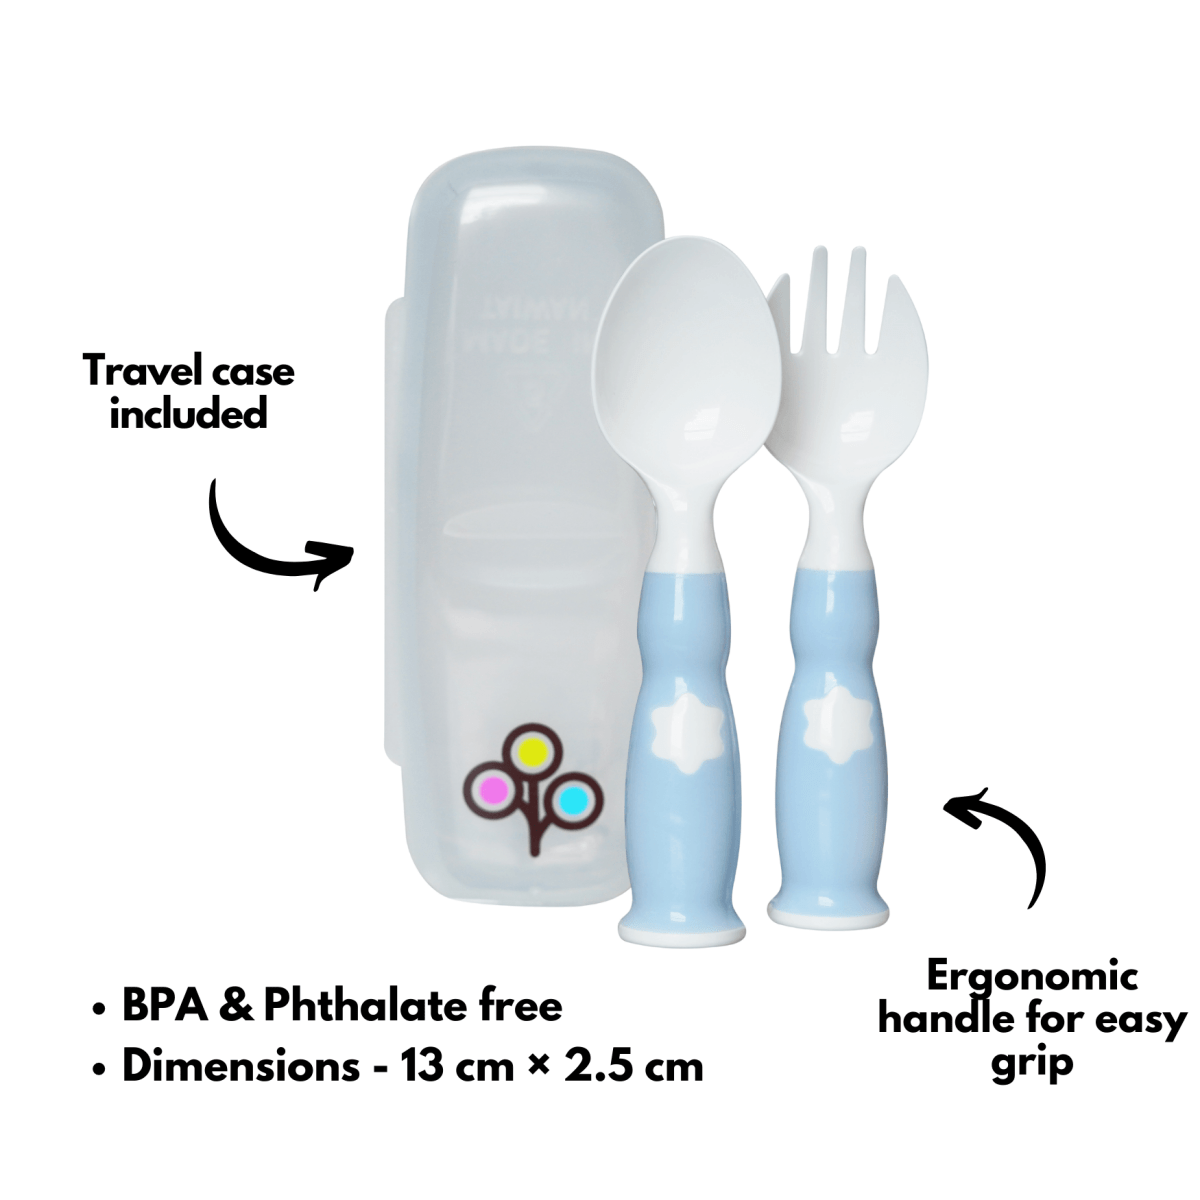 ZoLi Ergonomic Fork & Spoon Set with Travel Case - Mist Blue - BF20FSMB02